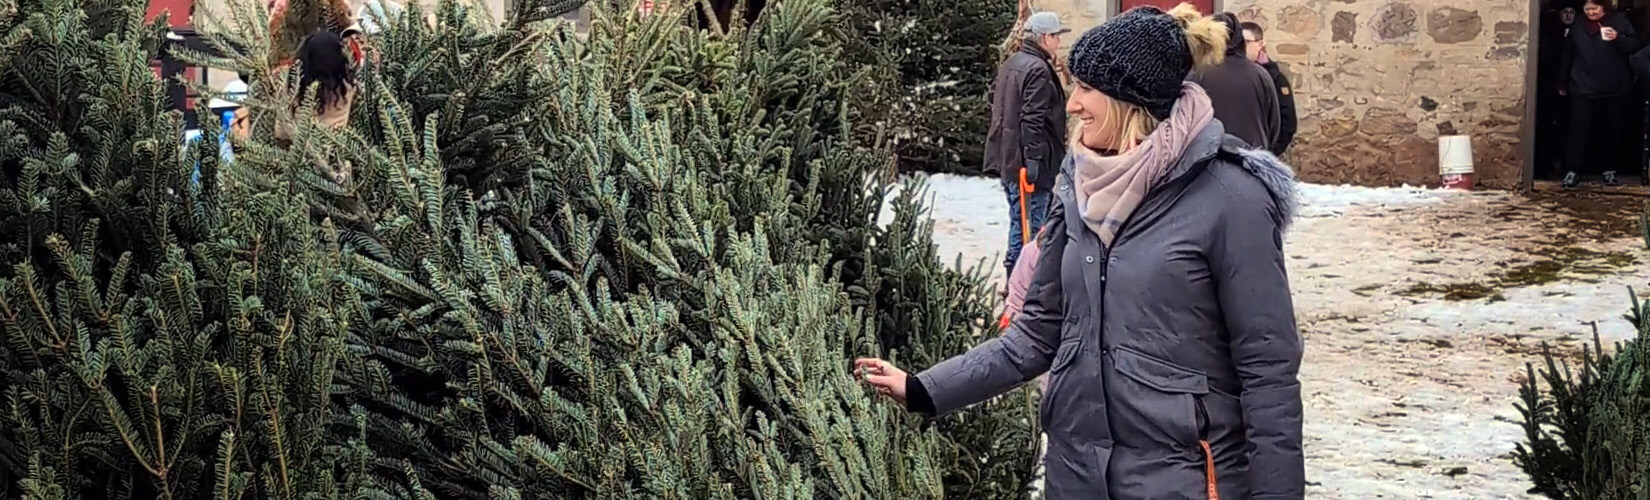 7 Christmas Tree Farms Near Toronto To Check Out This Holiday Season :: I've Been Bit! Travel Blog